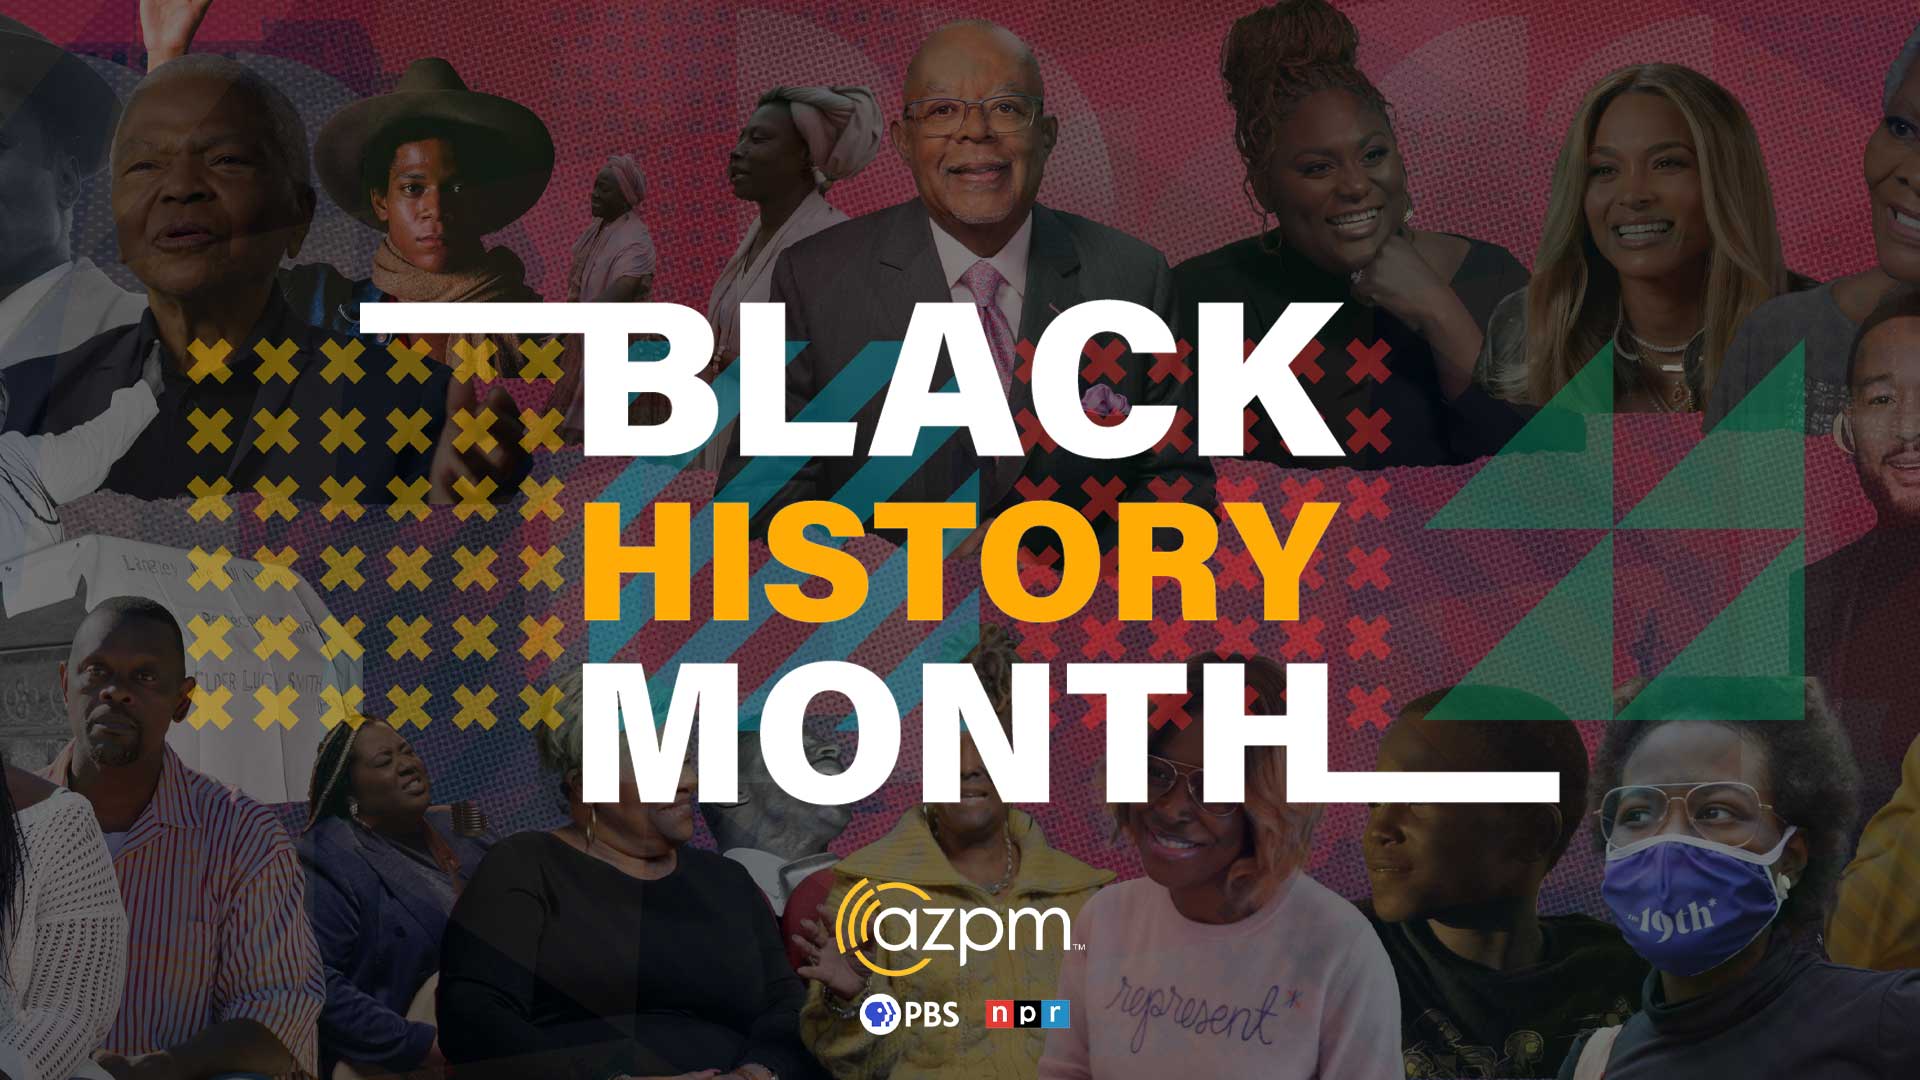 AZPM Celebrates Black History Month